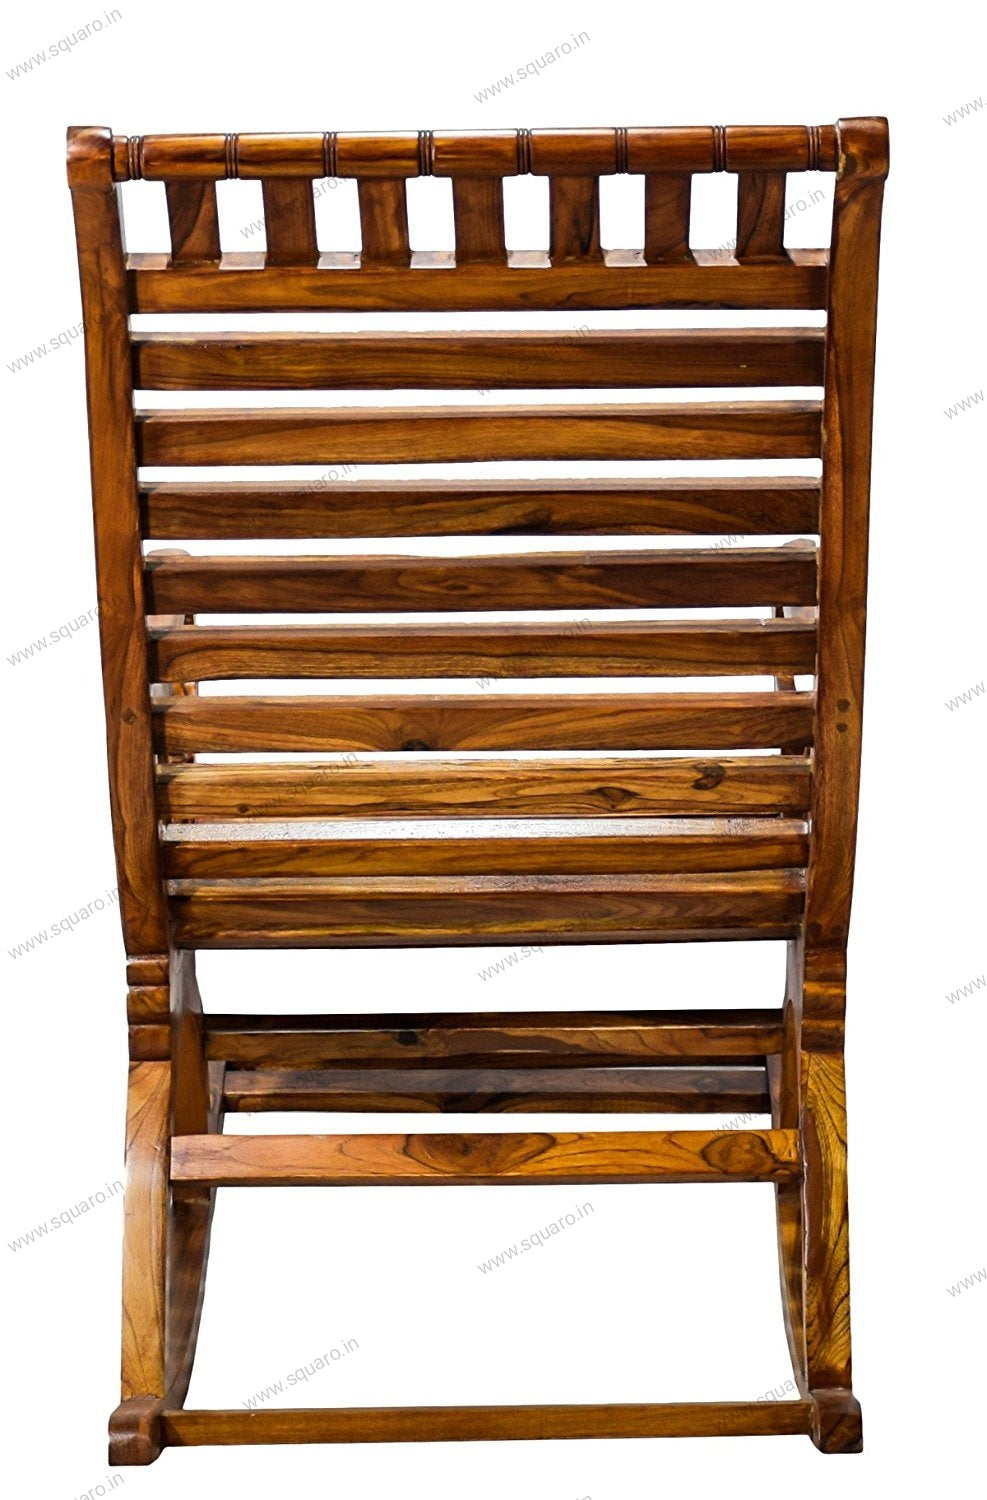 Wooden Rocking Chair, Wooden Rolling Chair, Wooden Easy relax Chair Sheesham Wood